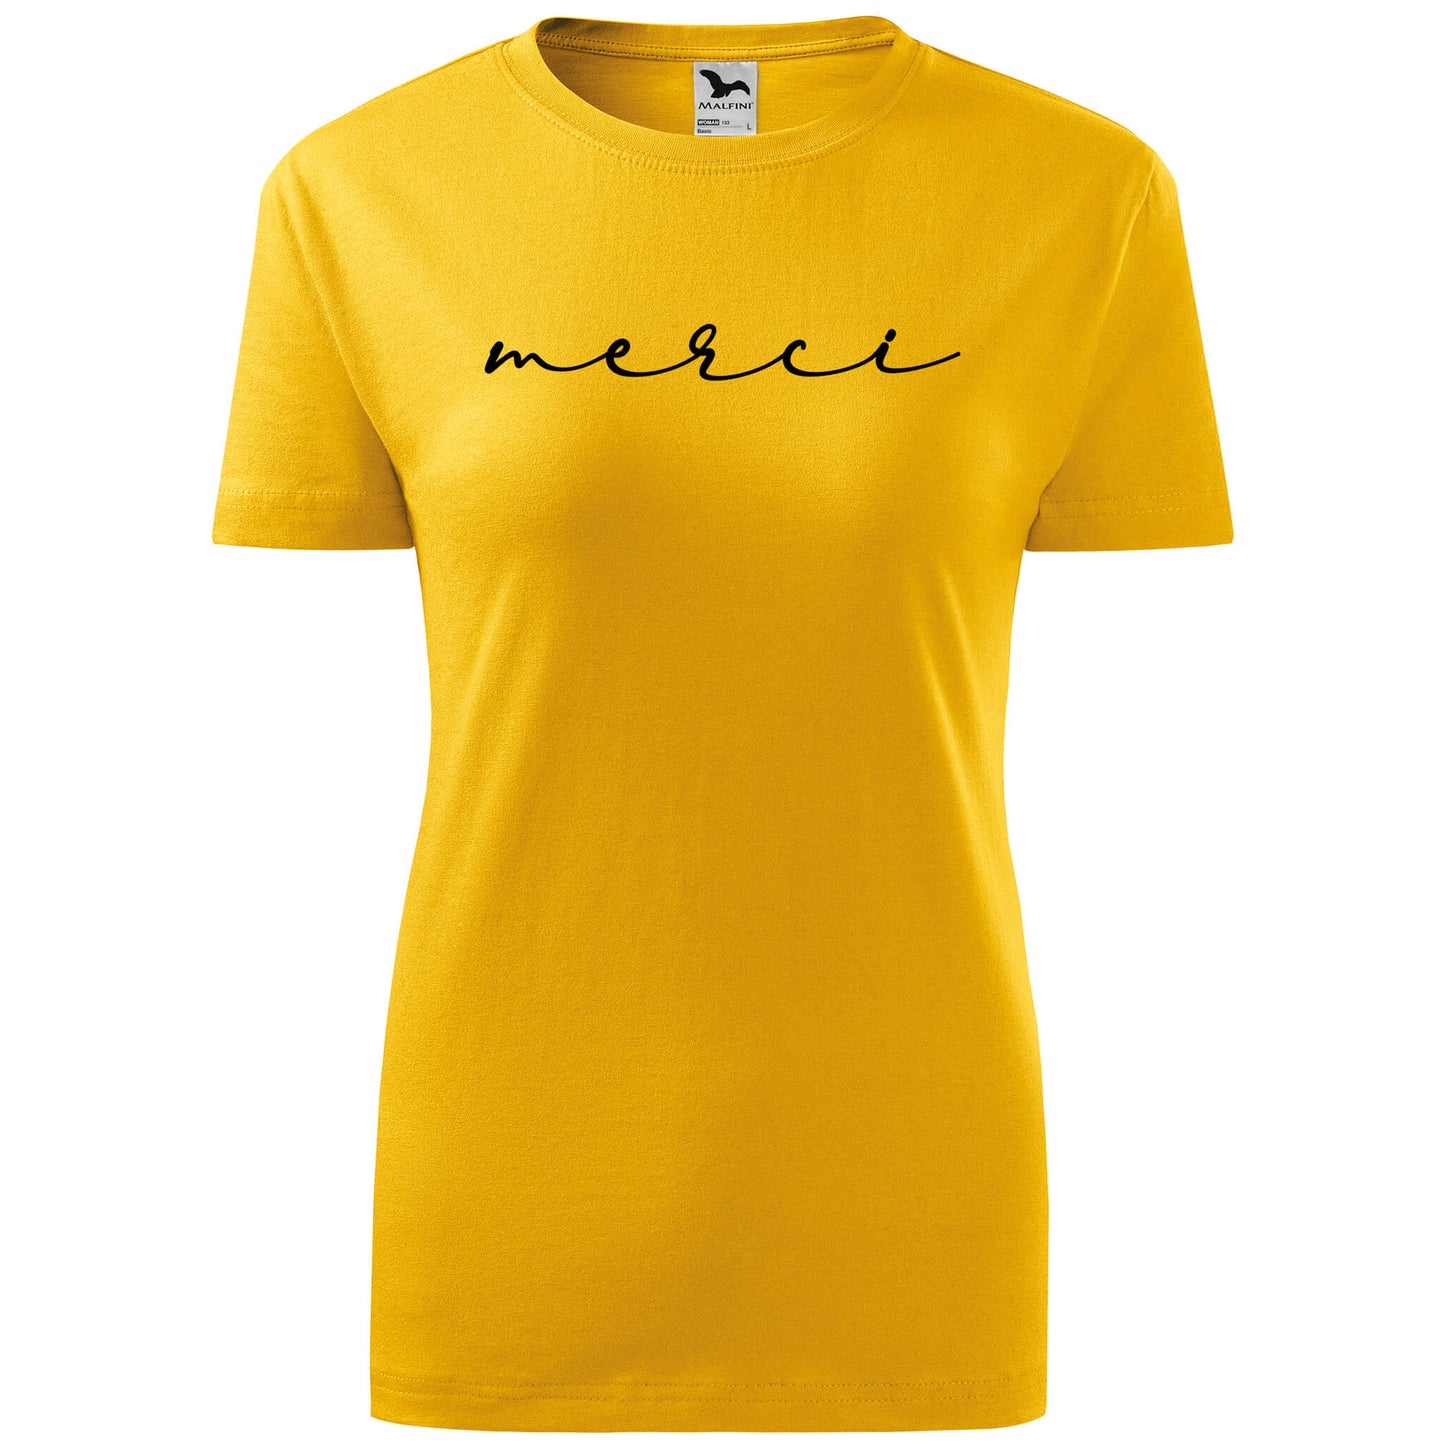 T-shirt - merci - rvdesignprint